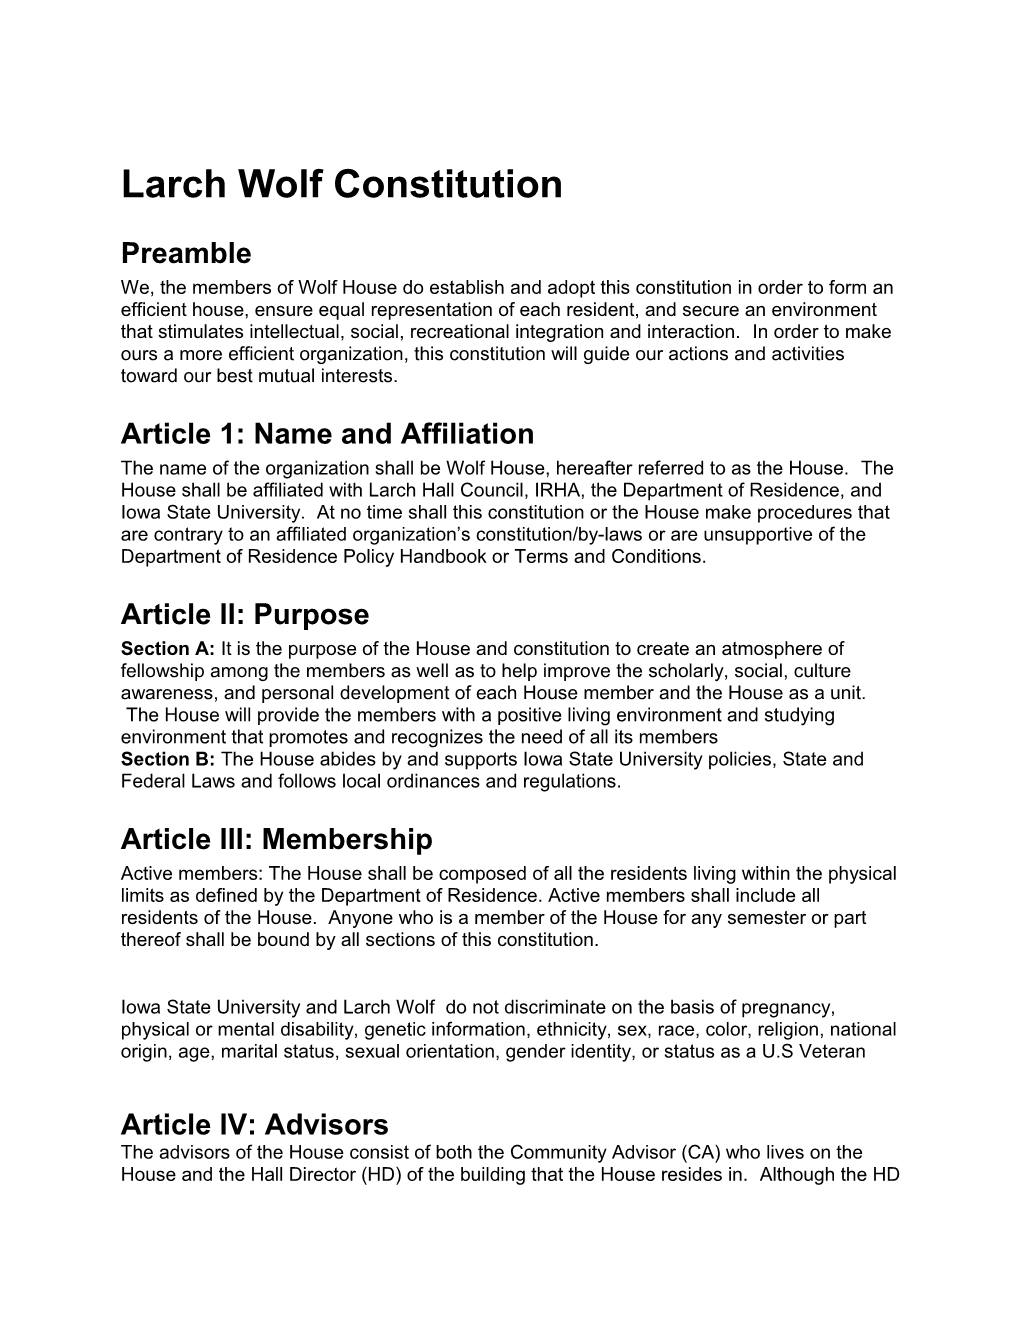 Larch Wolf Constitution